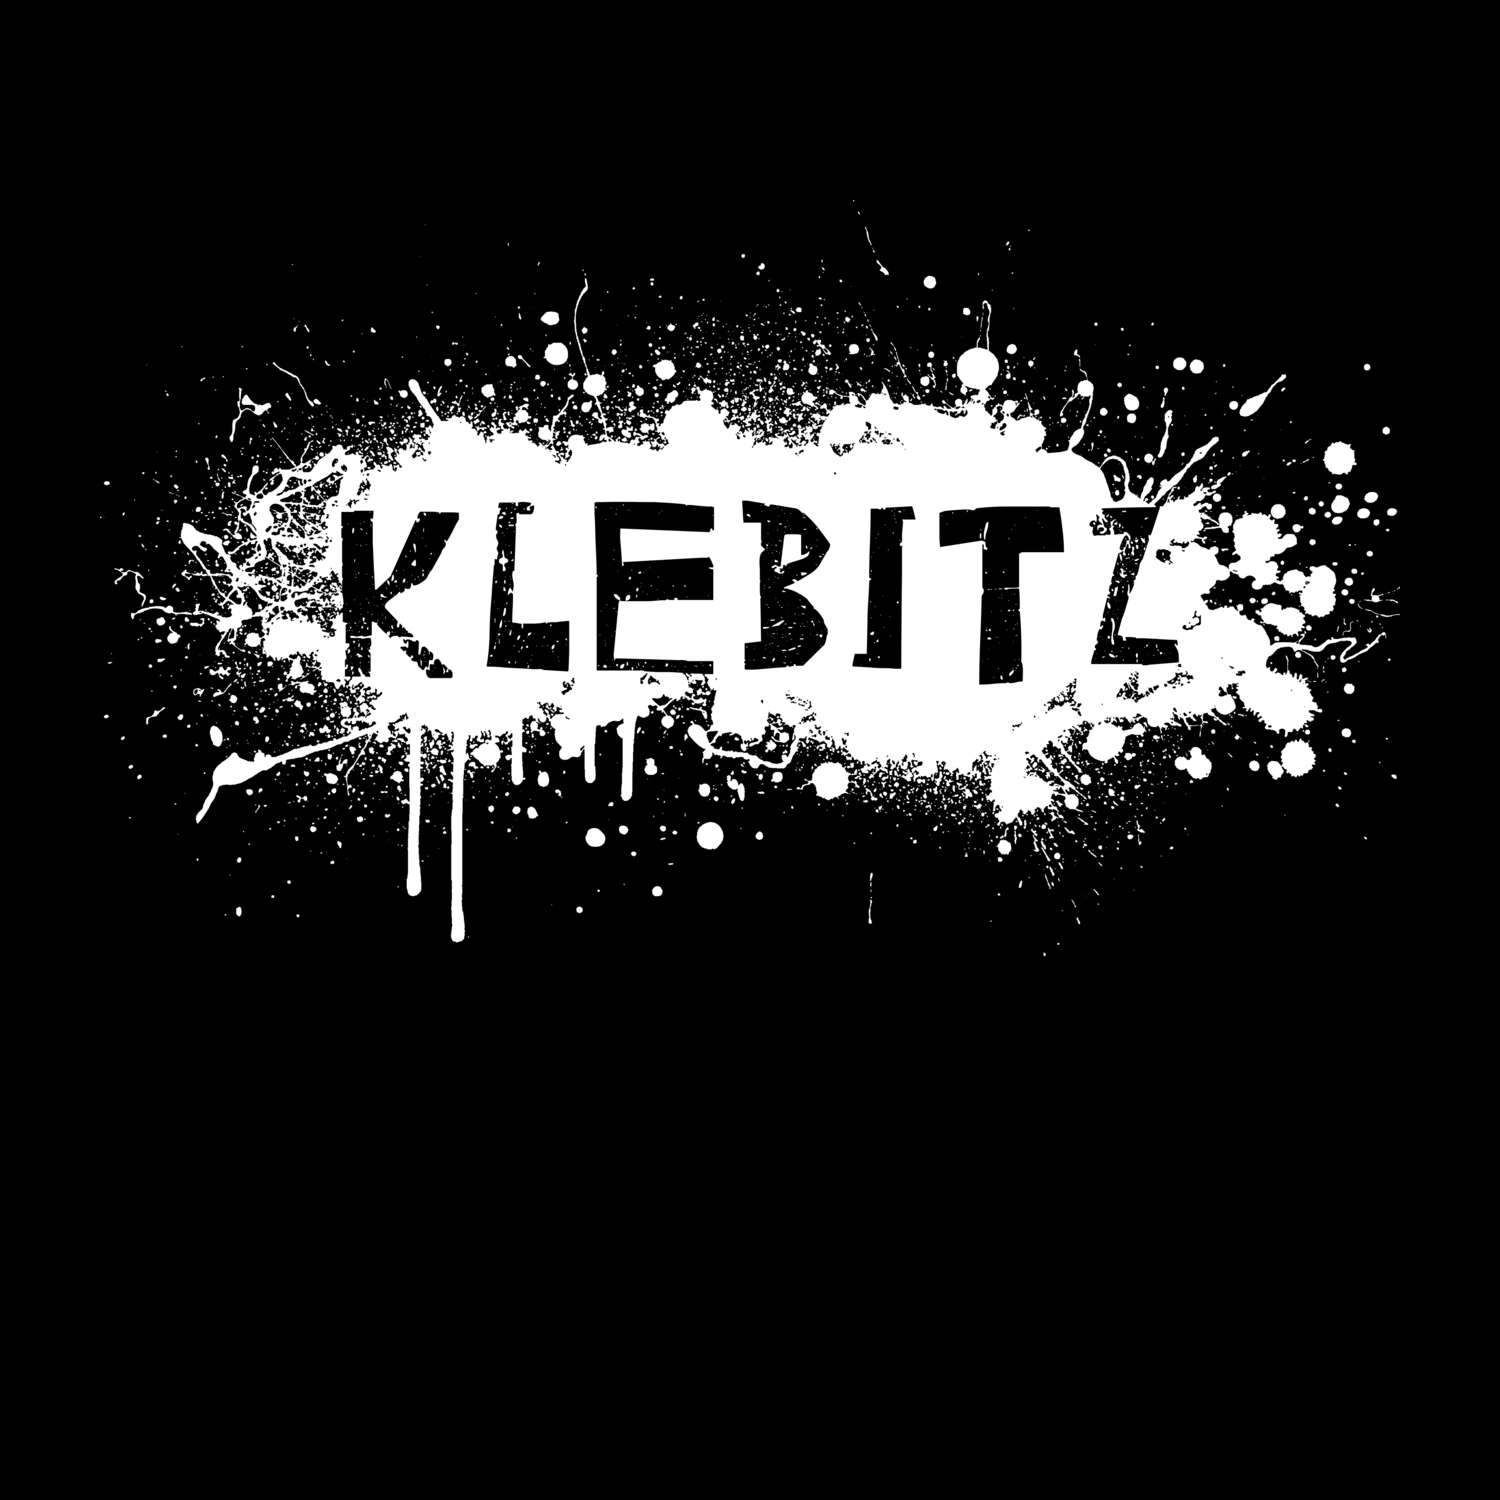 Klebitz T-Shirt »Paint Splash Punk«